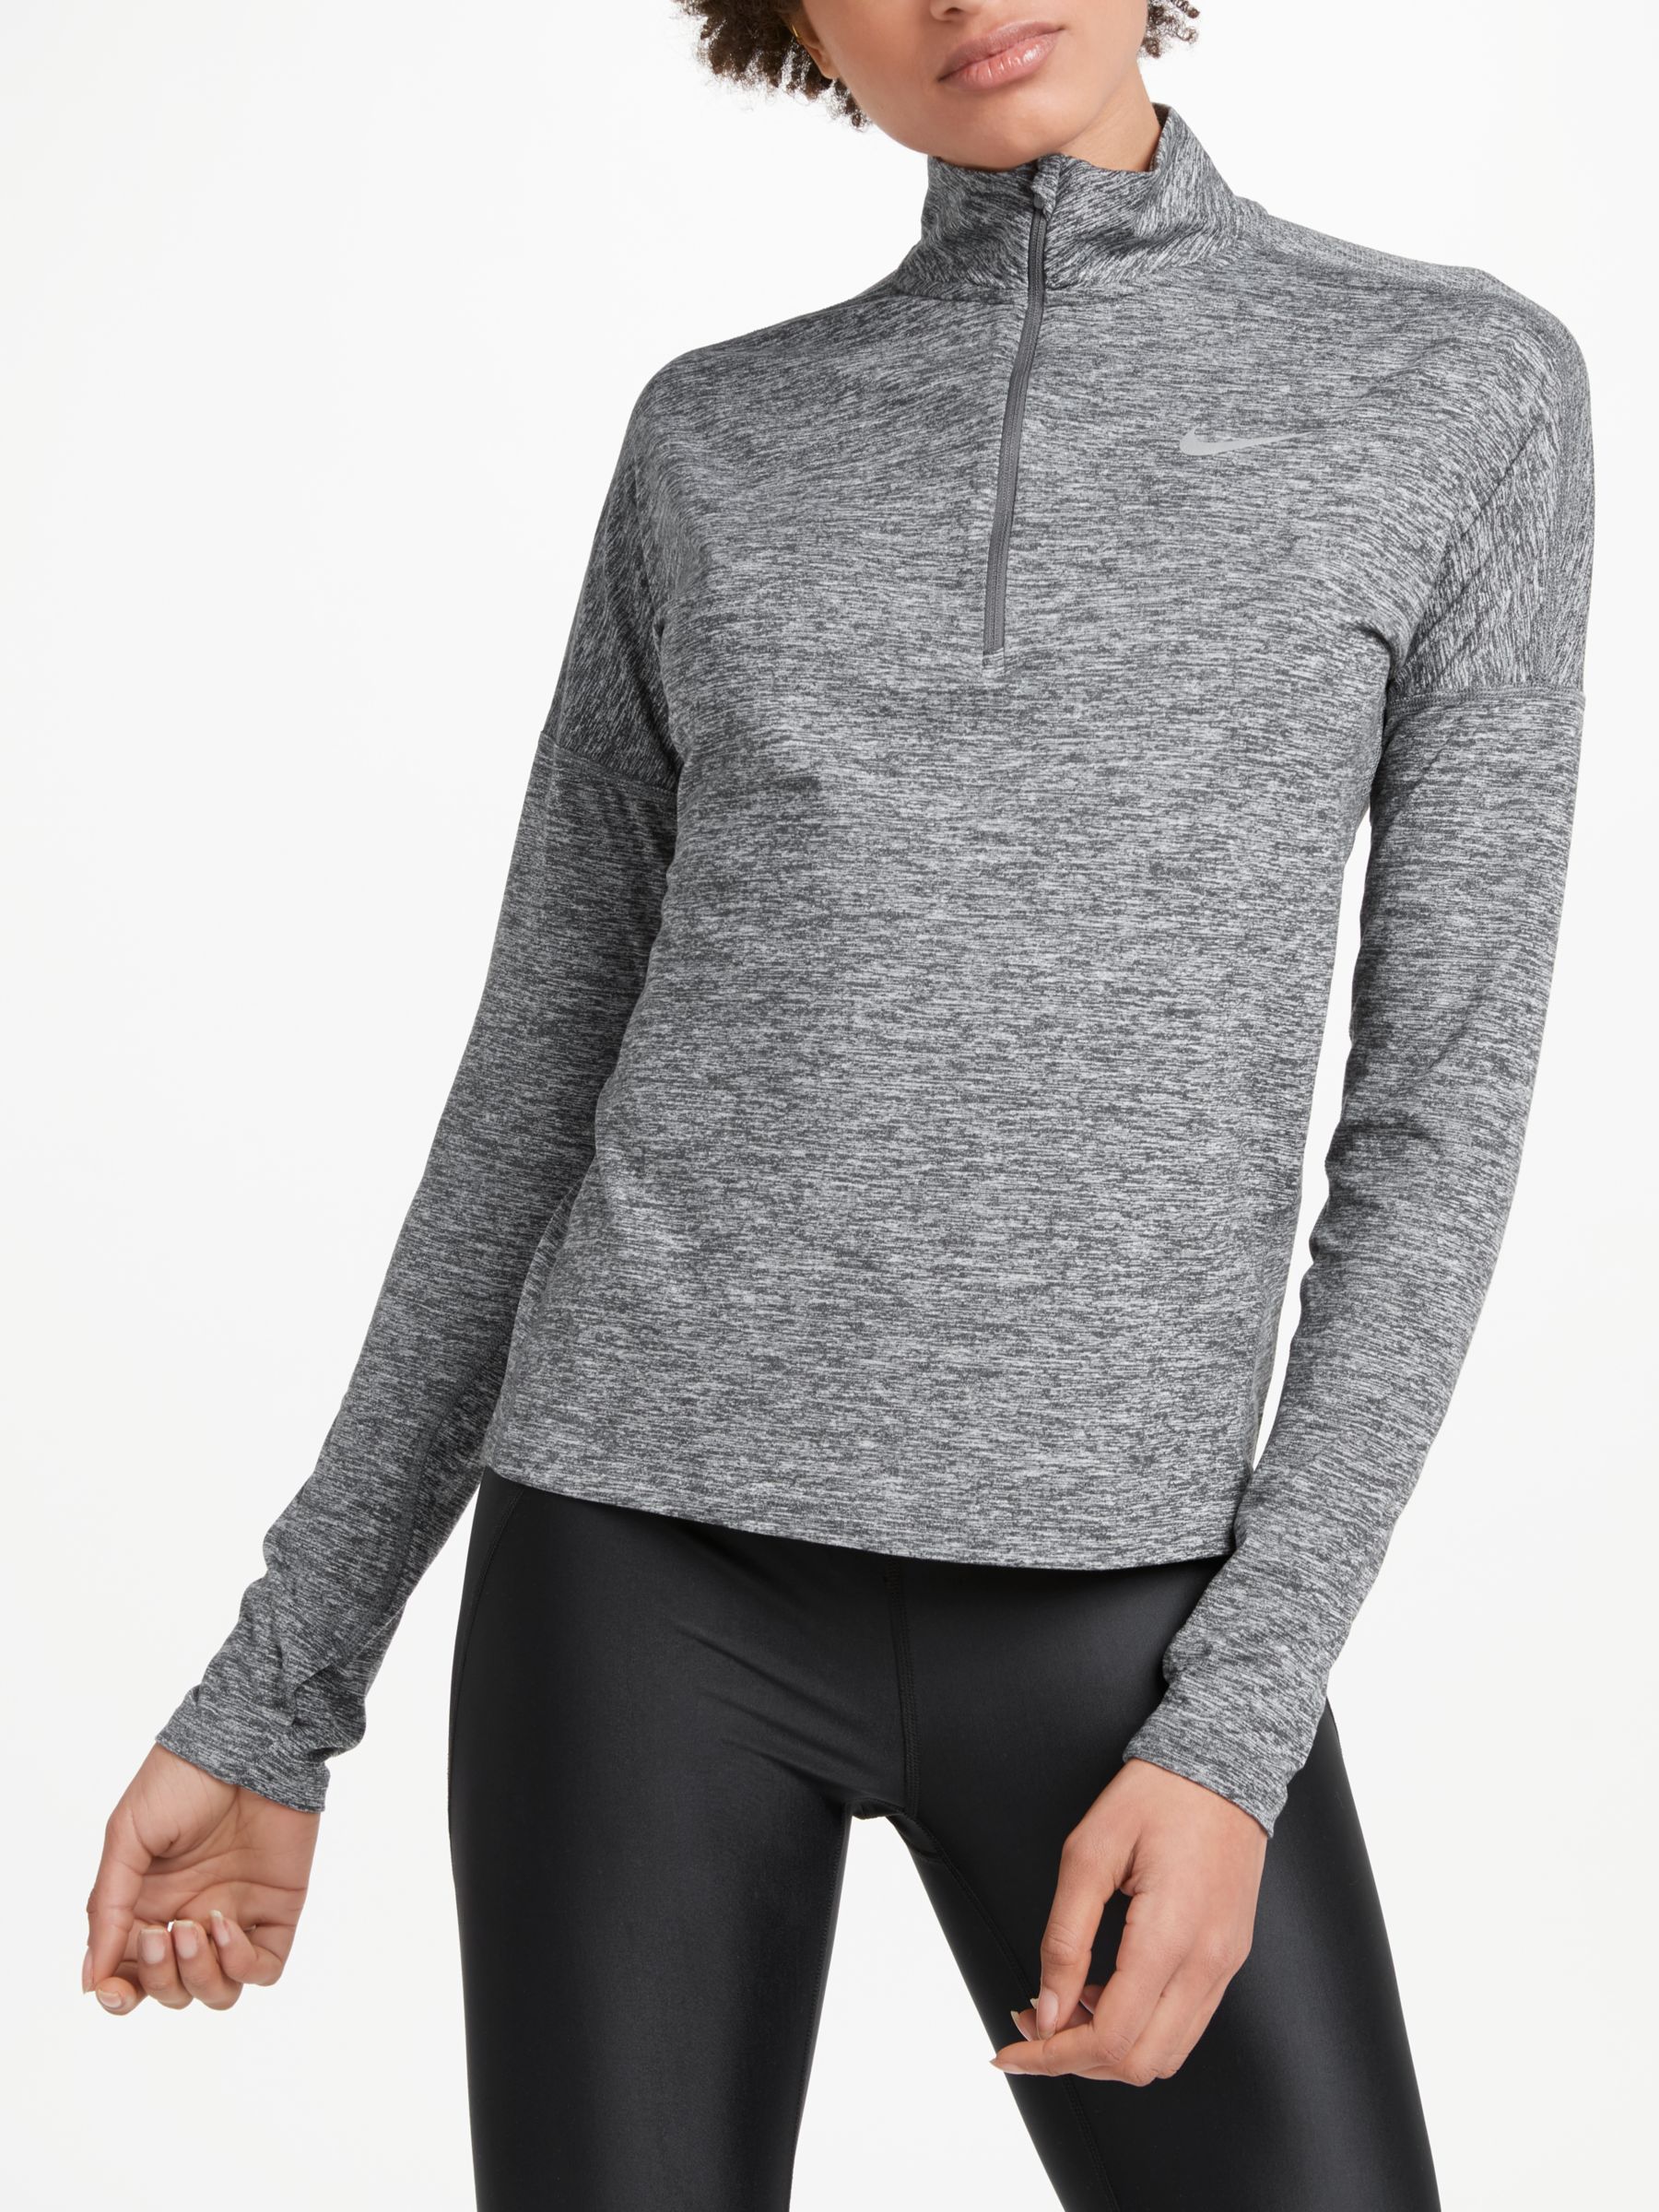 Nike Dry Element Long Sleeve Running T-Shirt, Dark Grey Heather, M